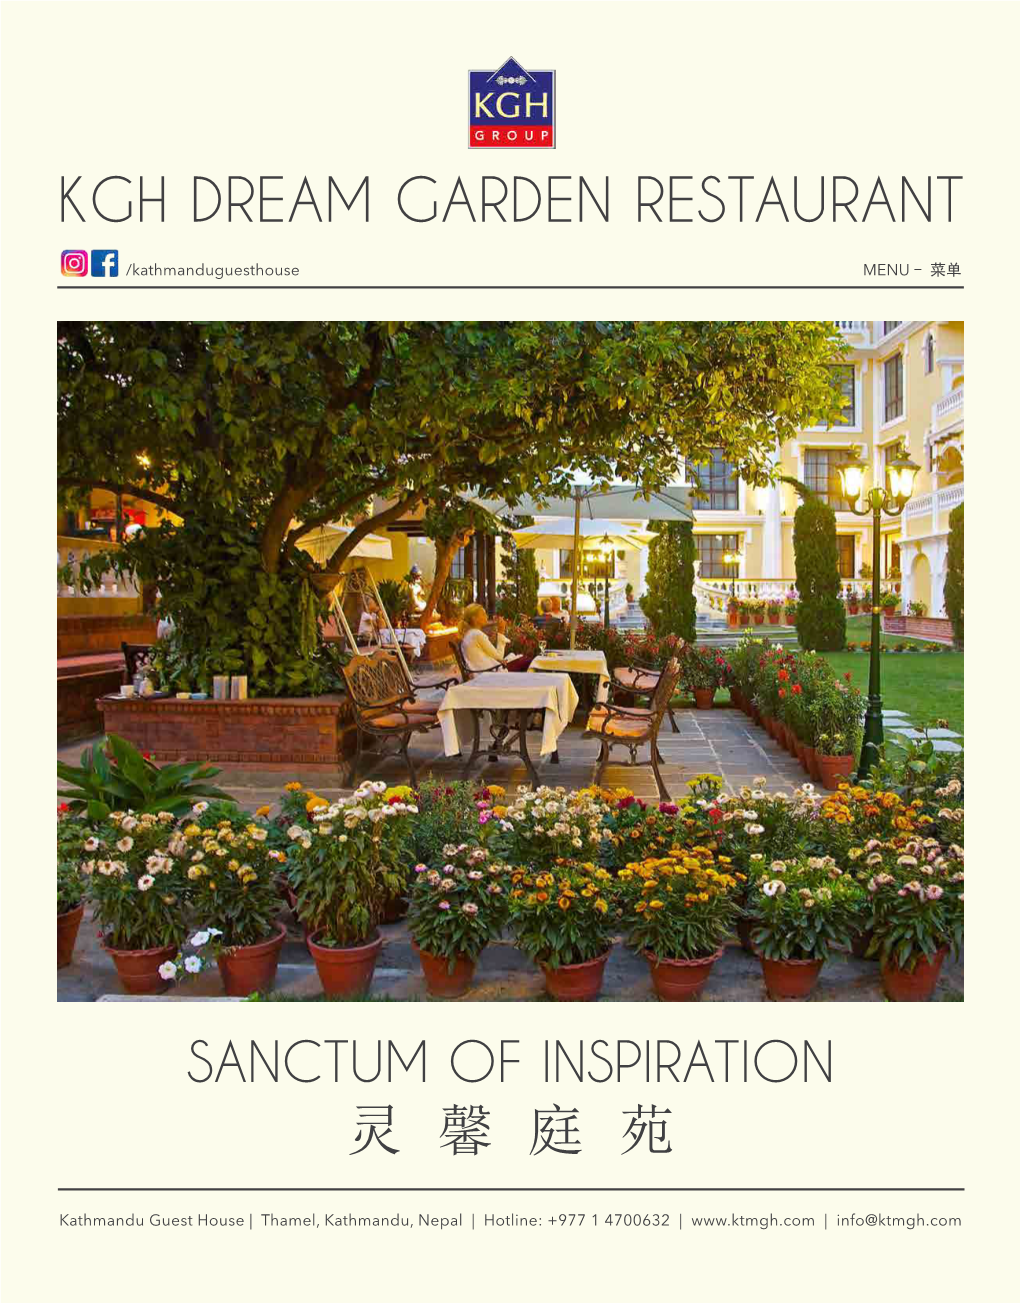 Kgh Dream Garden Restaurant